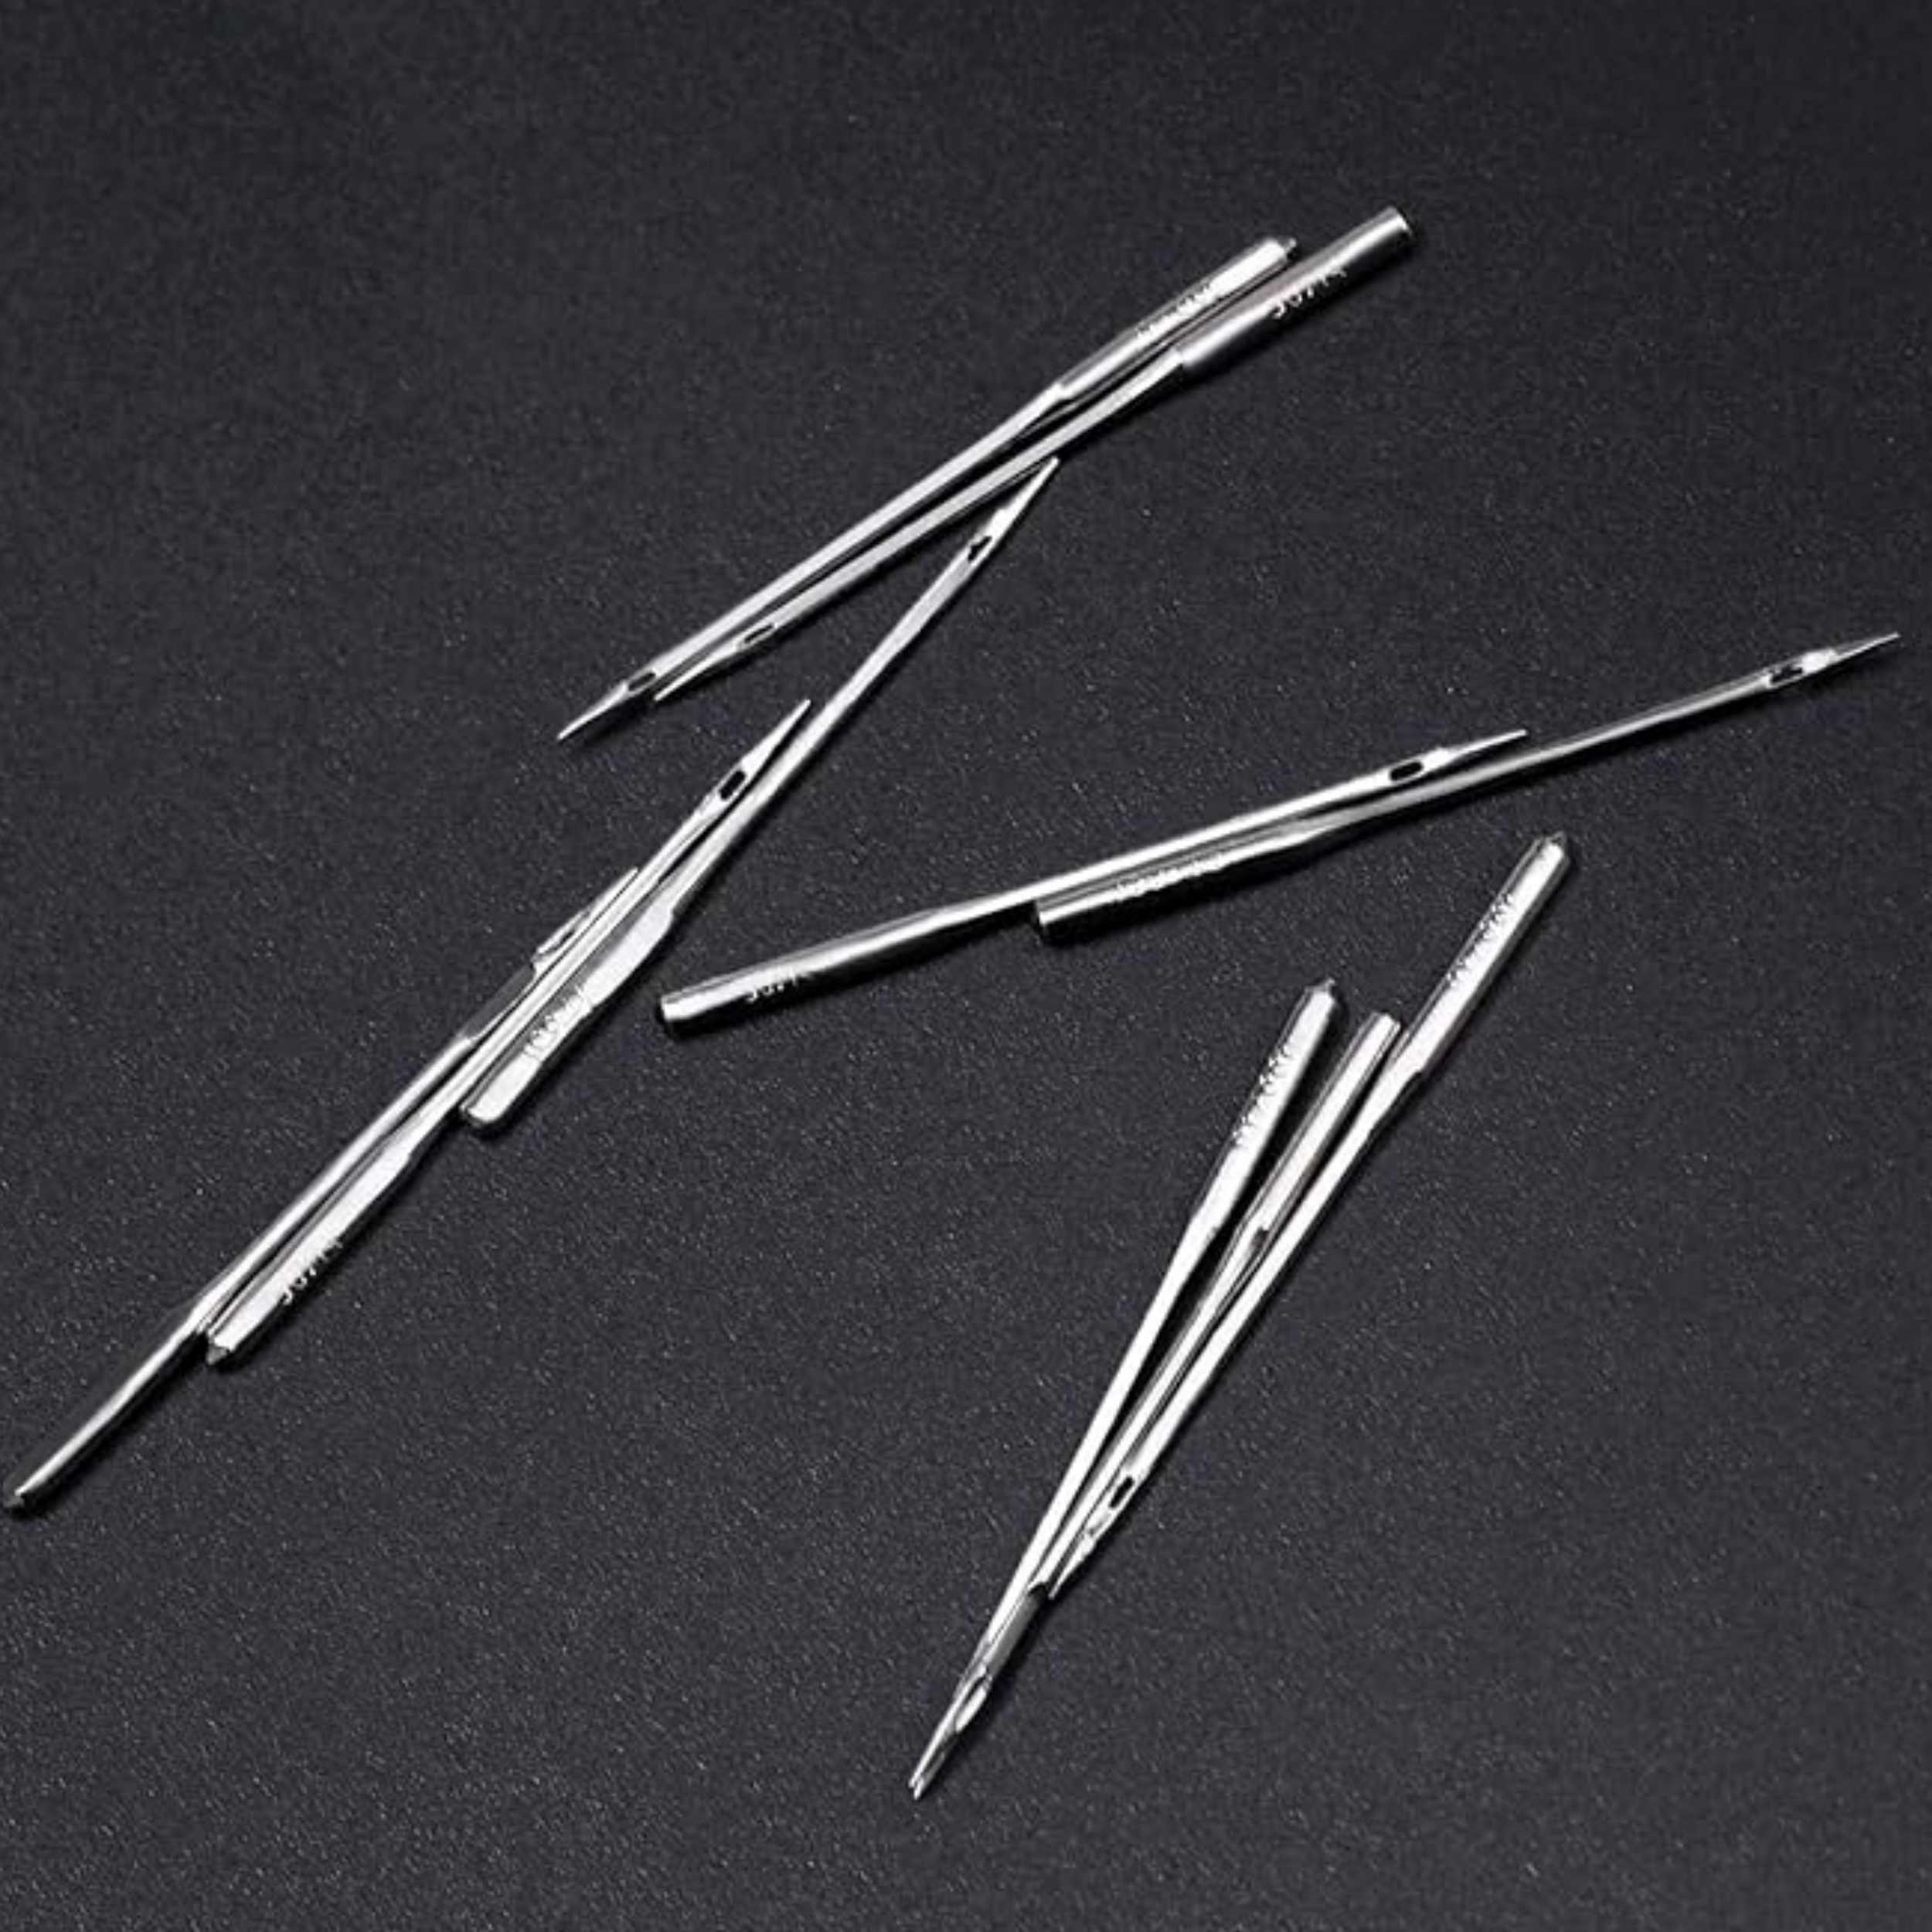 Singer needles for overlock, needle thickness 80/11, 90/14, 100/16